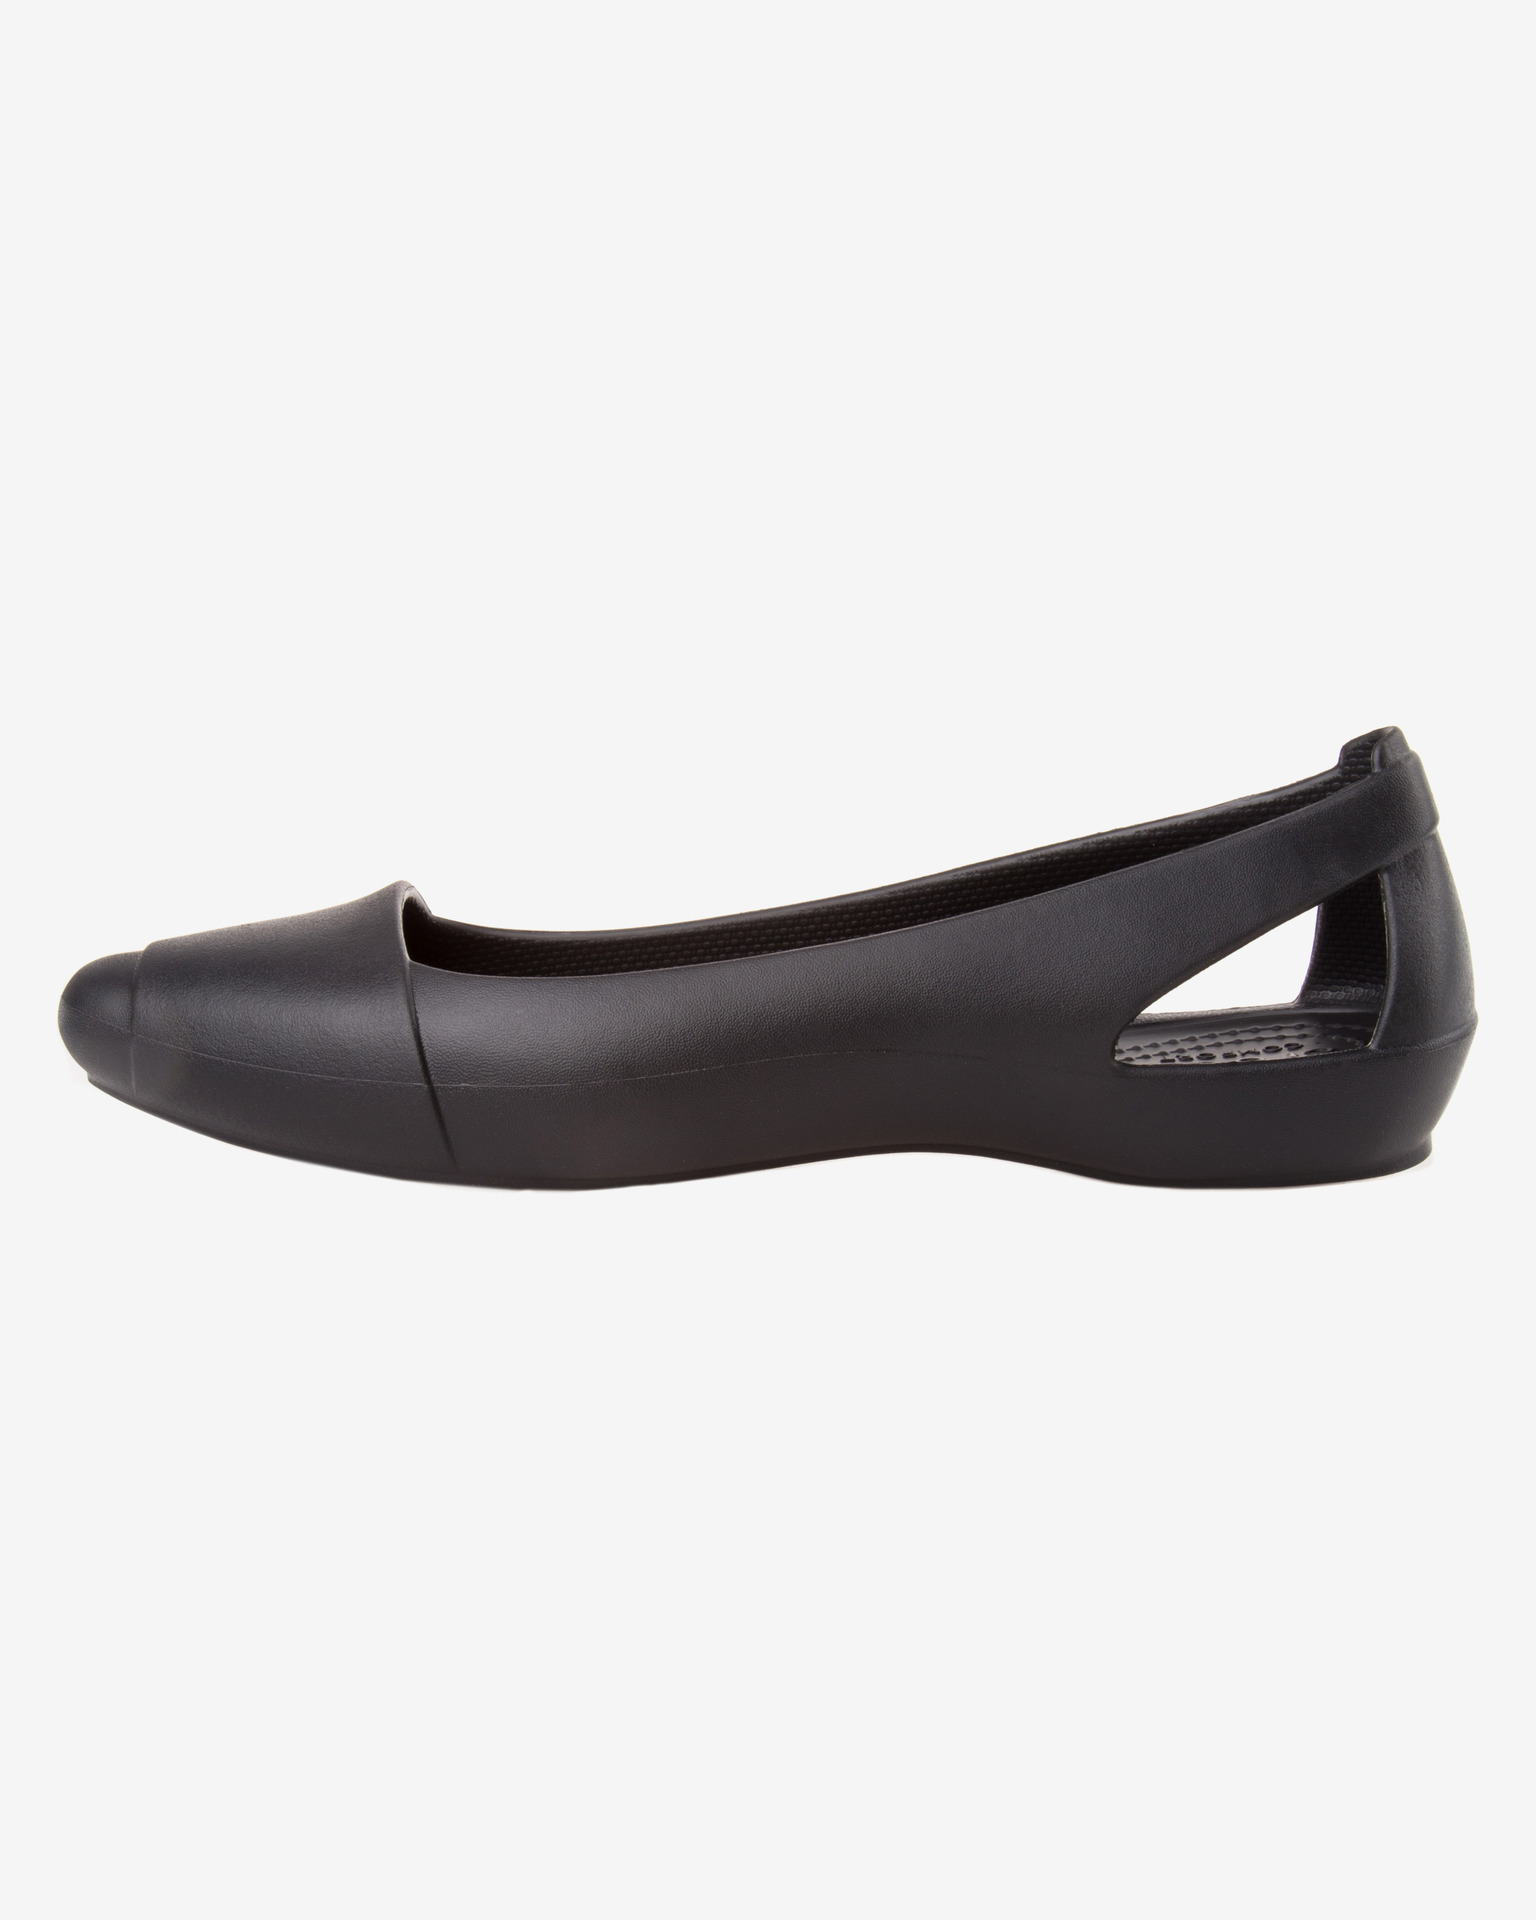 Crocs - Sienna Flat Ballet pumps 